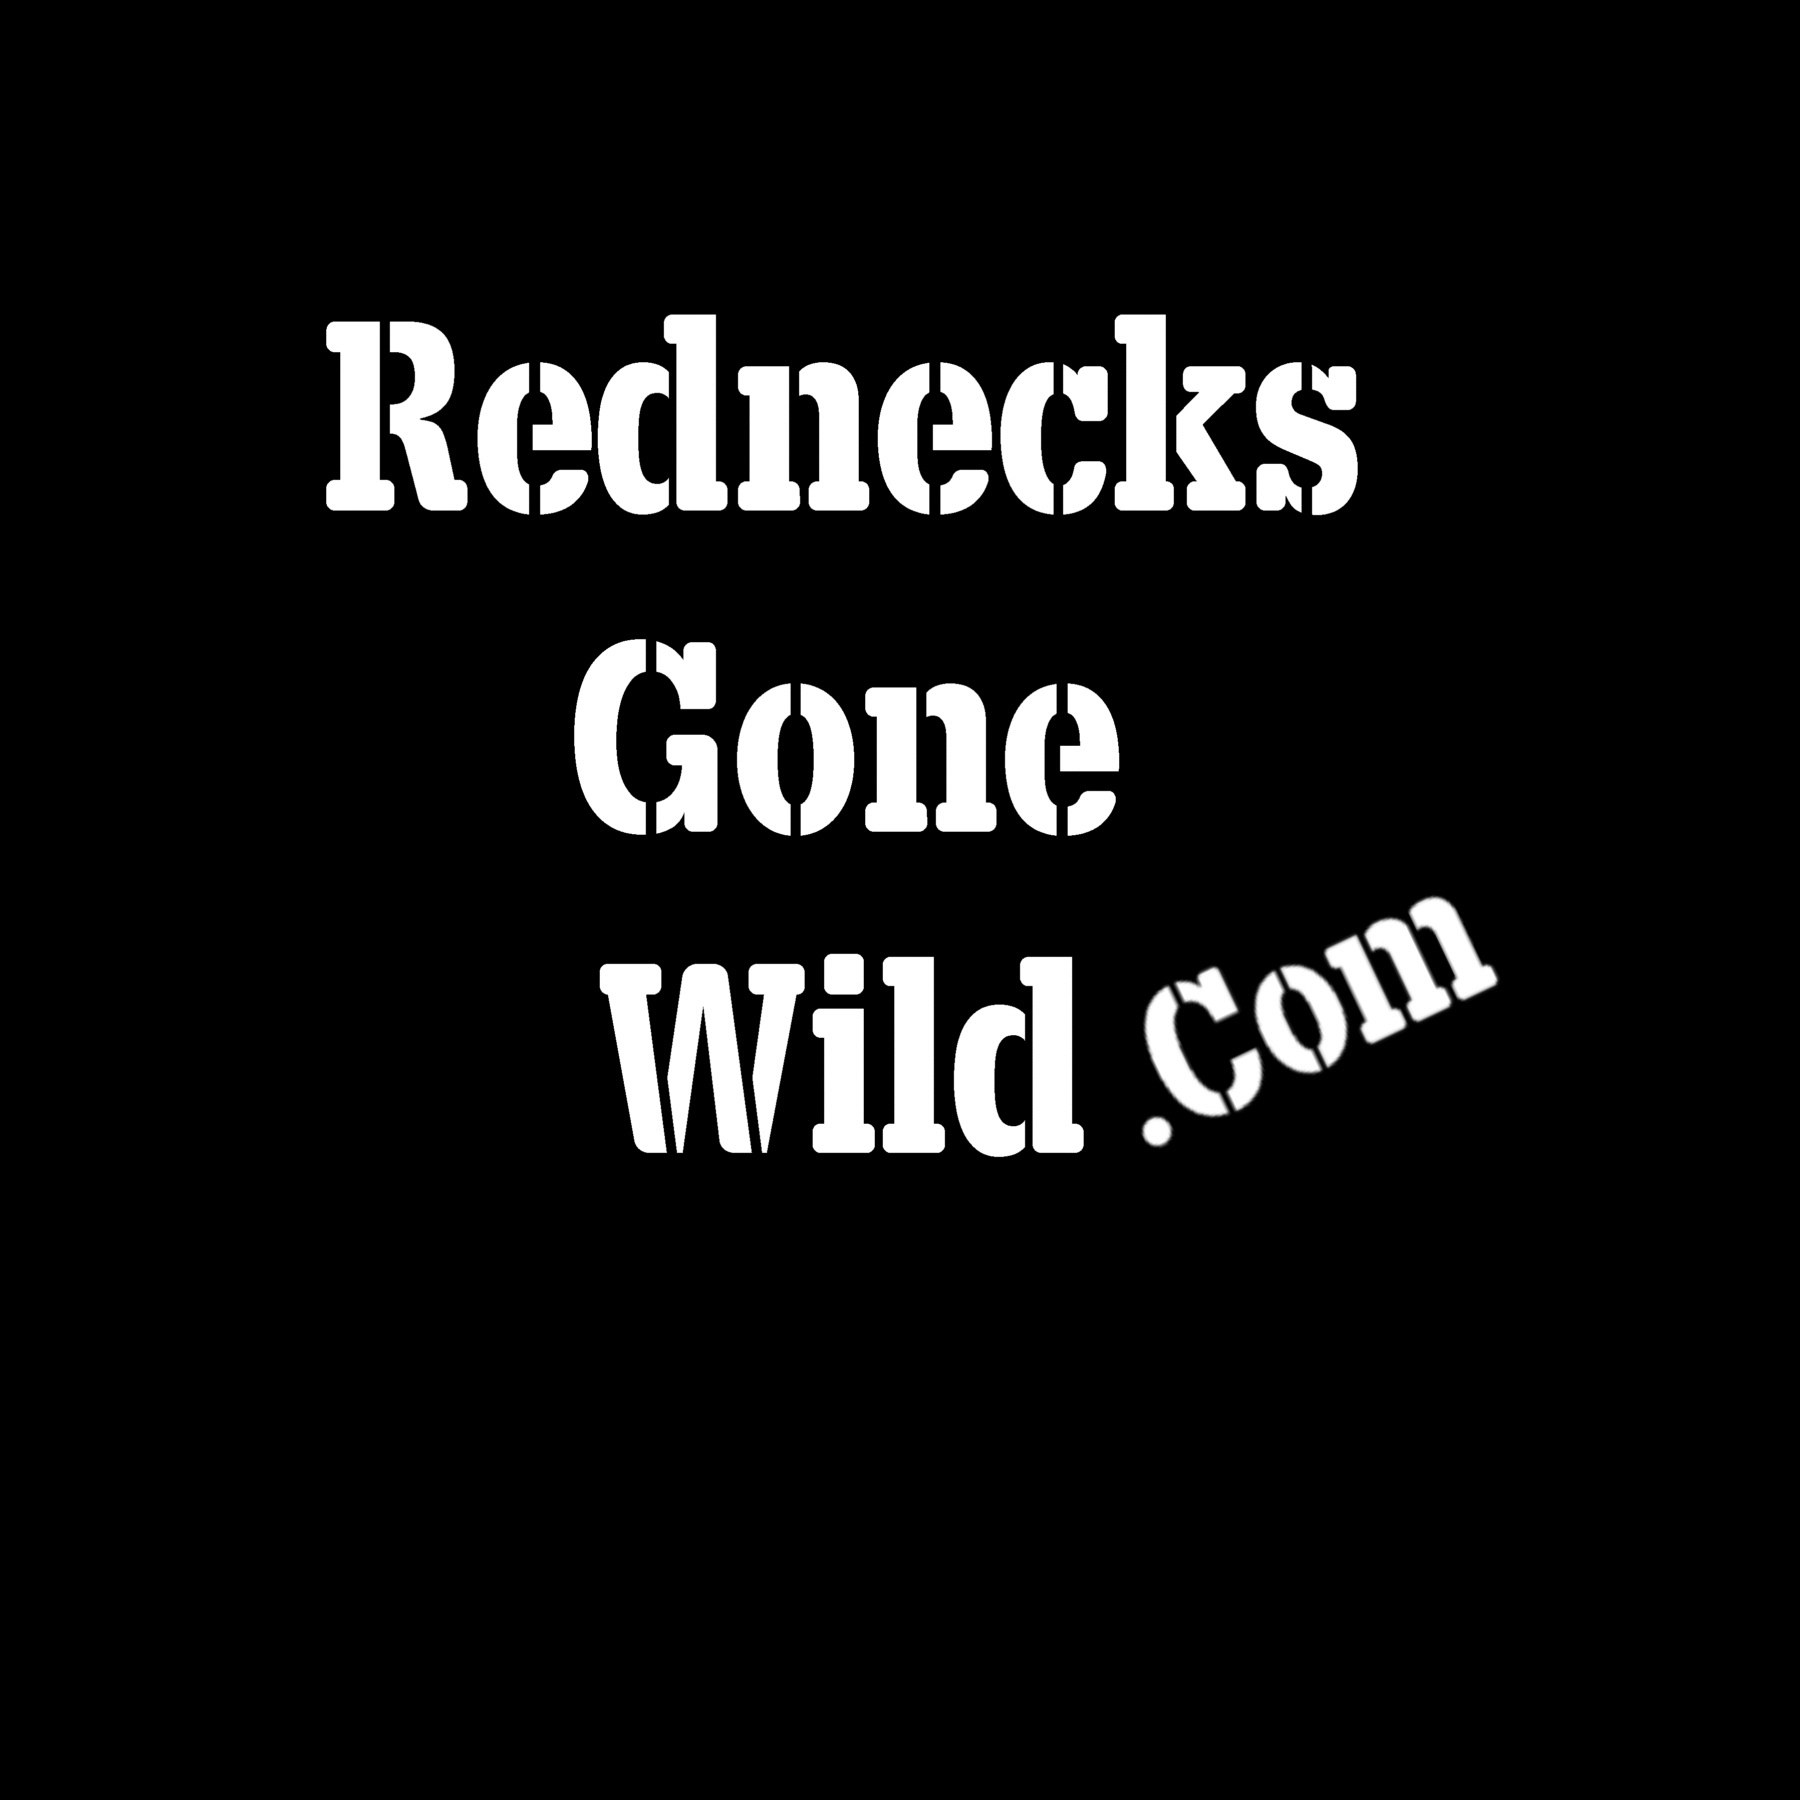 Rednecks Gone Wild